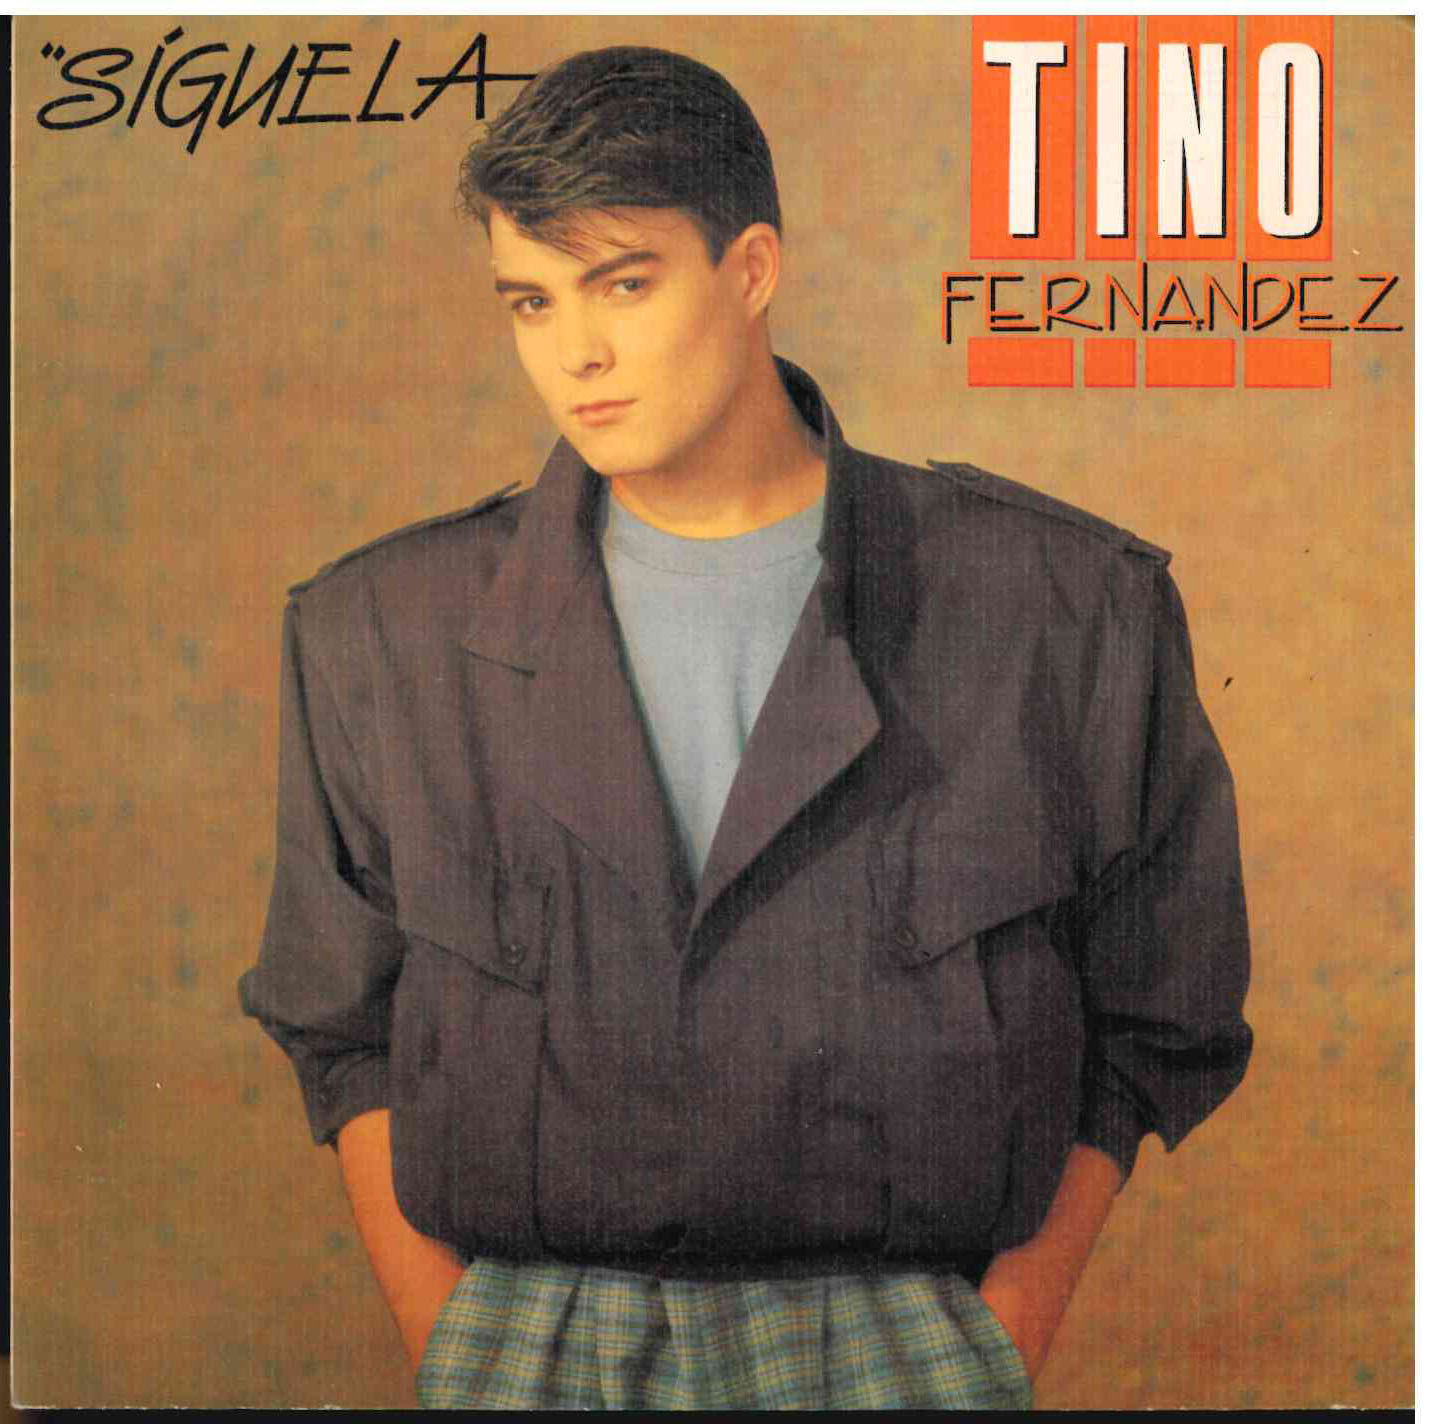 Tino Fernández (Parchís). Síguela / Casi, casi amor. RCA 1985 (PB-7866). Single promocional